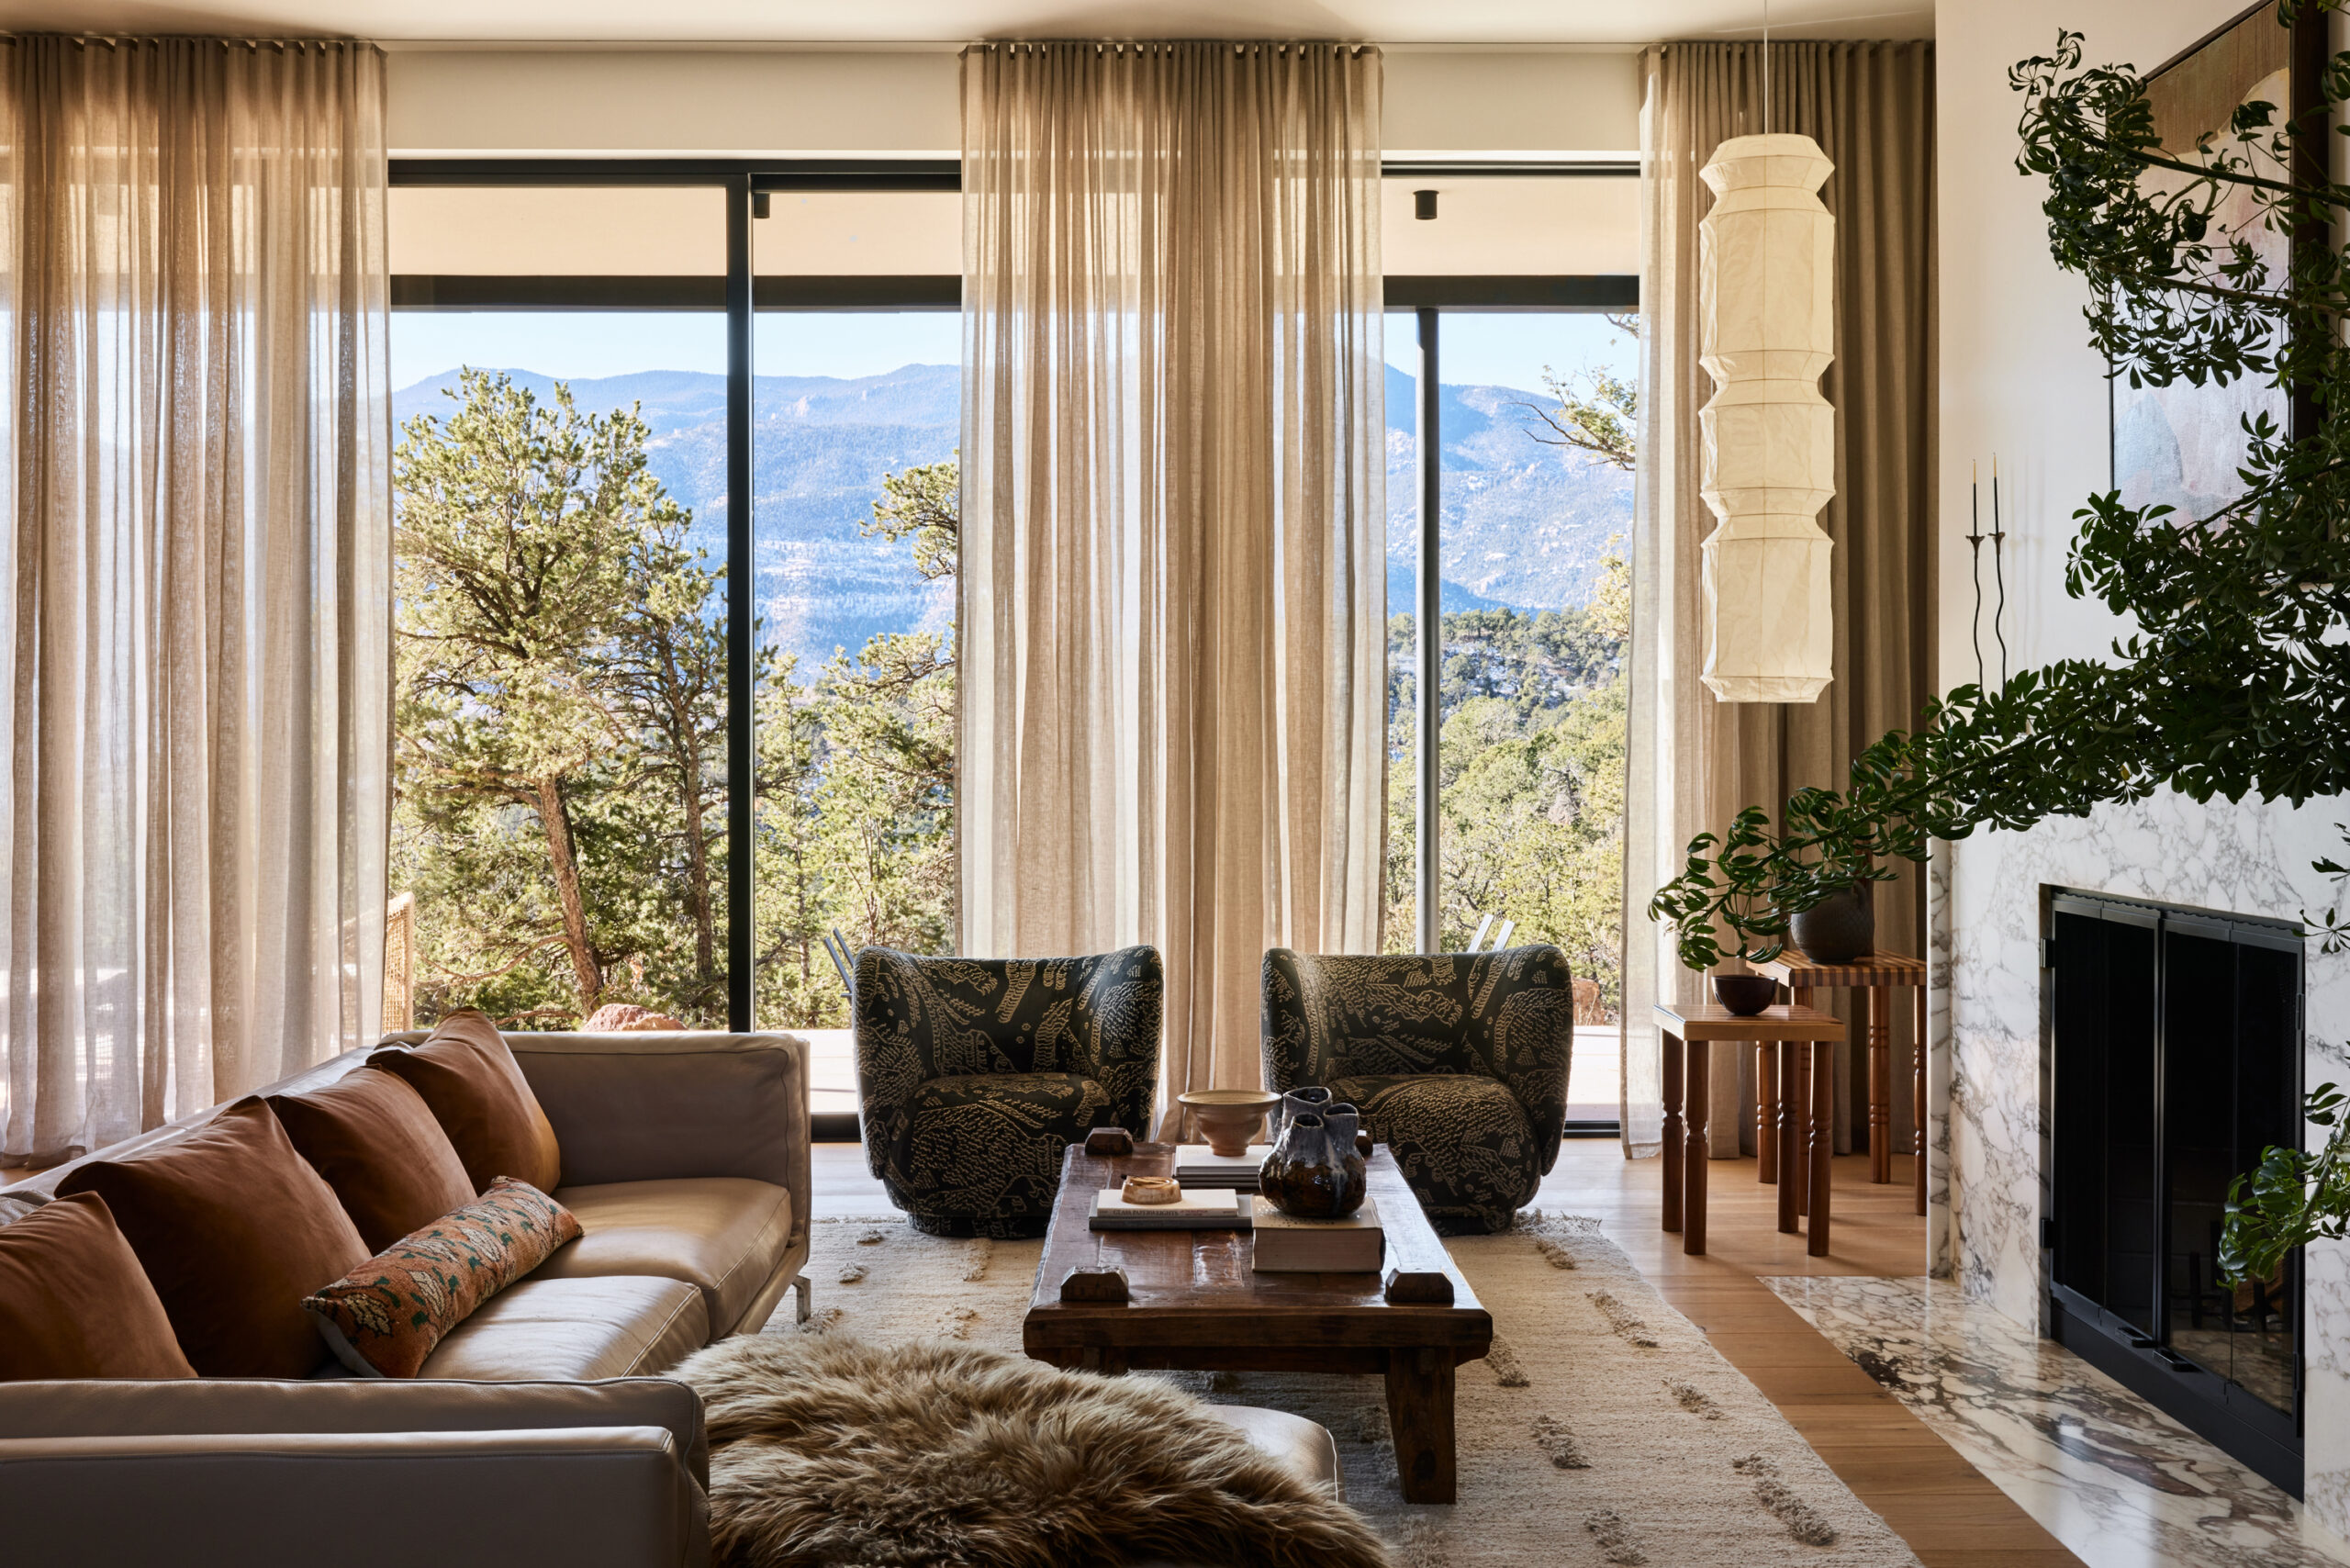 Sonoma Design Firm Creates Stunning Family Home in Colorado